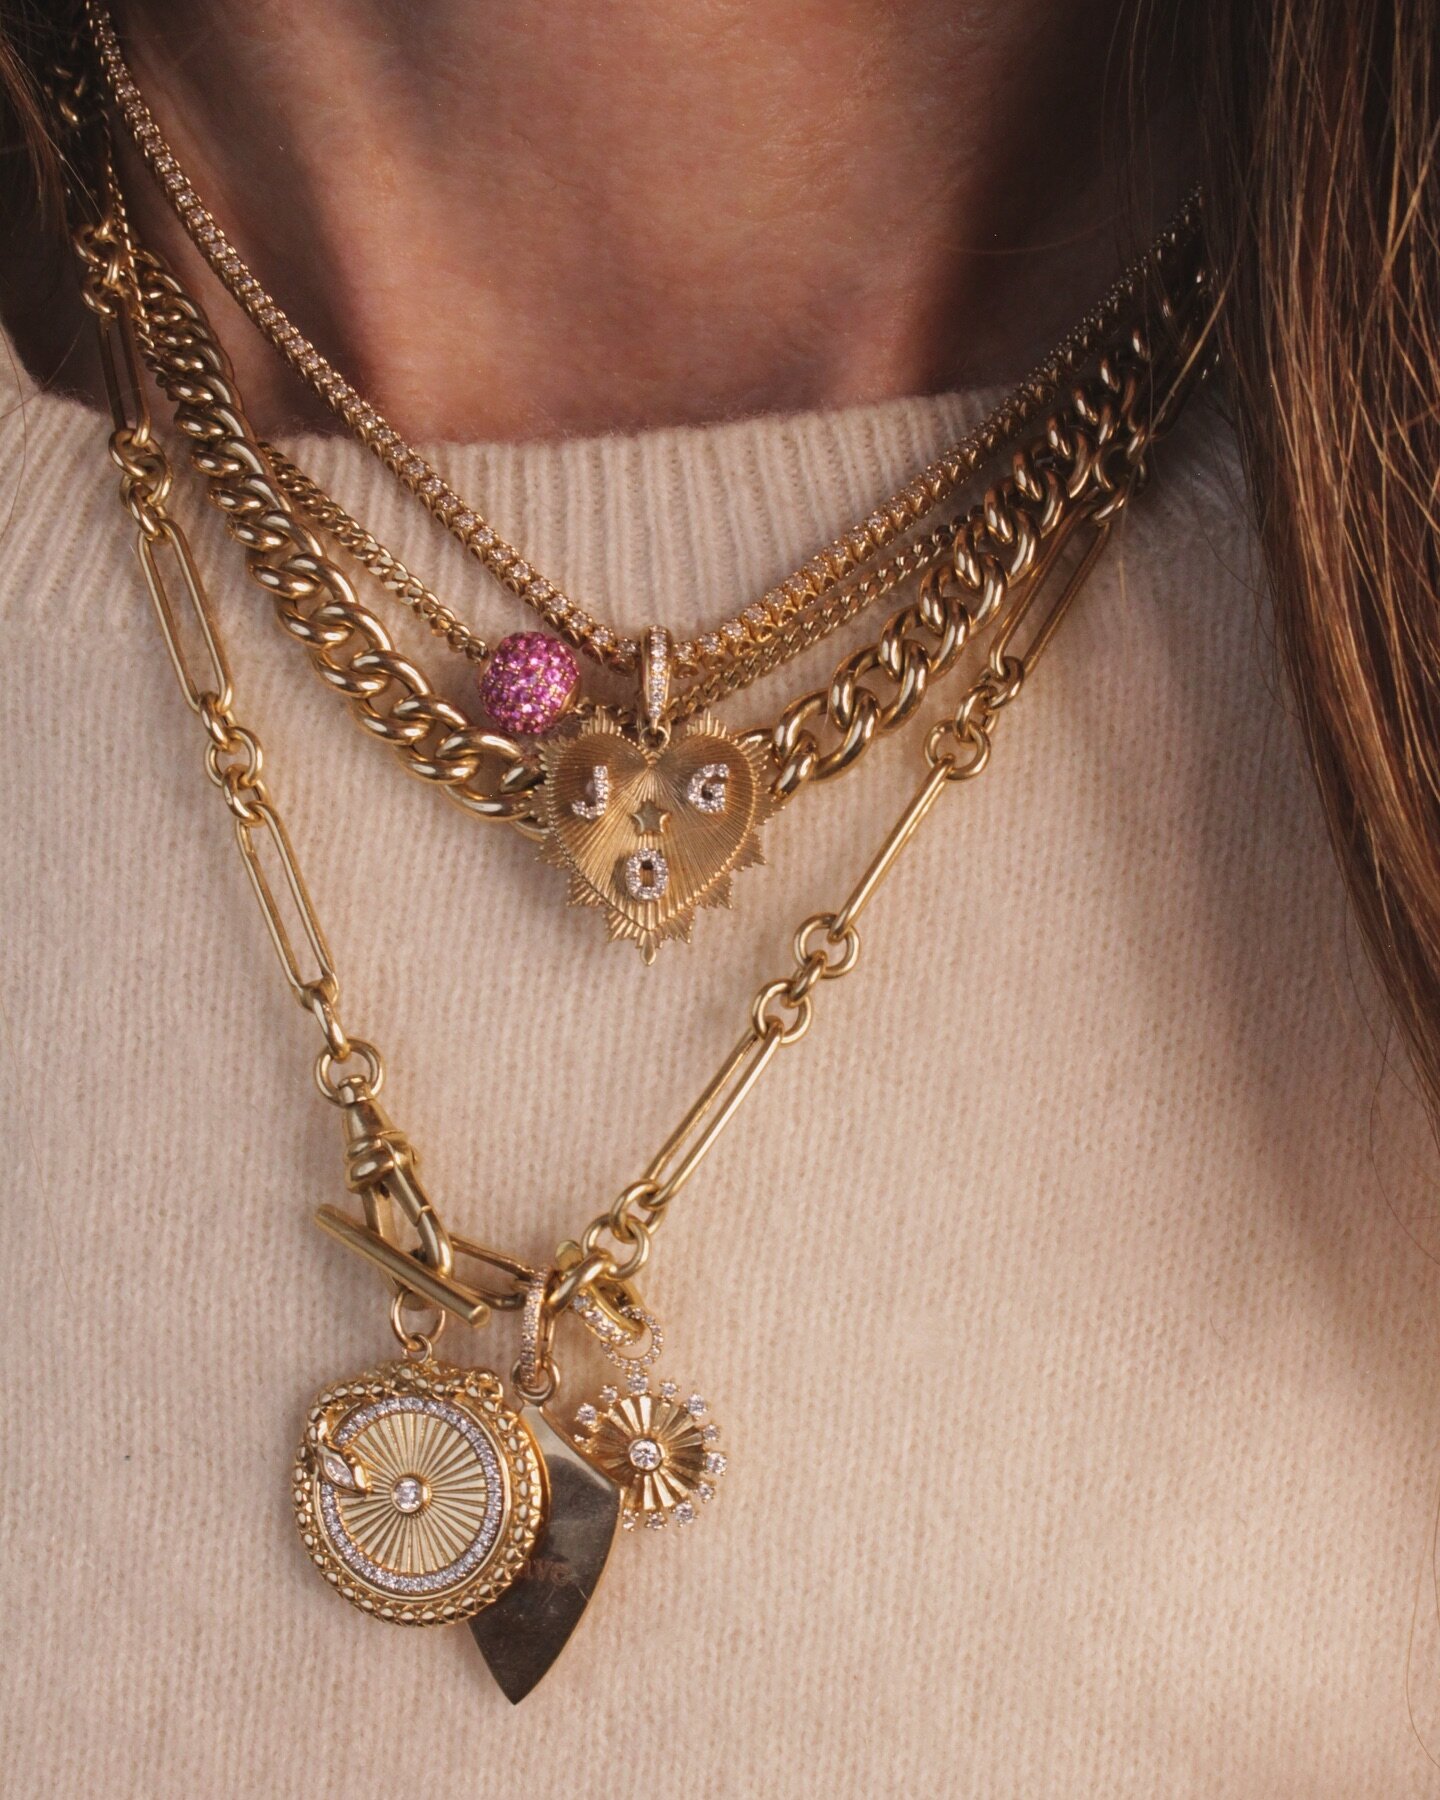 My every day go to look!
💕
#necklacestack #pretty #beauty #glamorous #finejewelry #jewelrydesigner #jewelry